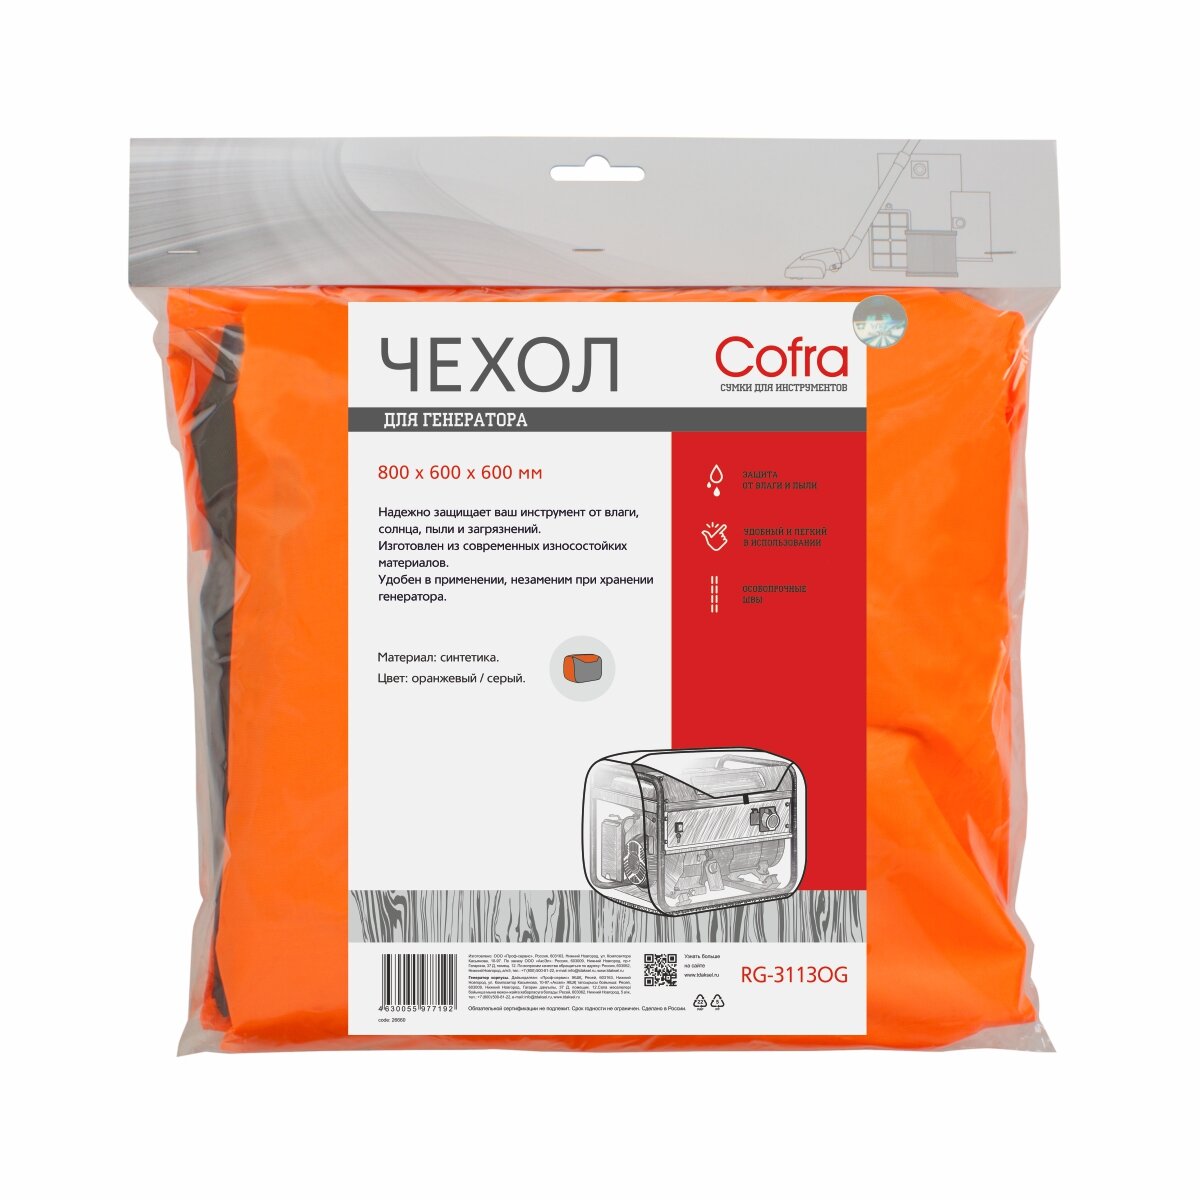 Чехол Cofra для генератора, оранжевый/серый, 800х600х600 - фотография № 1